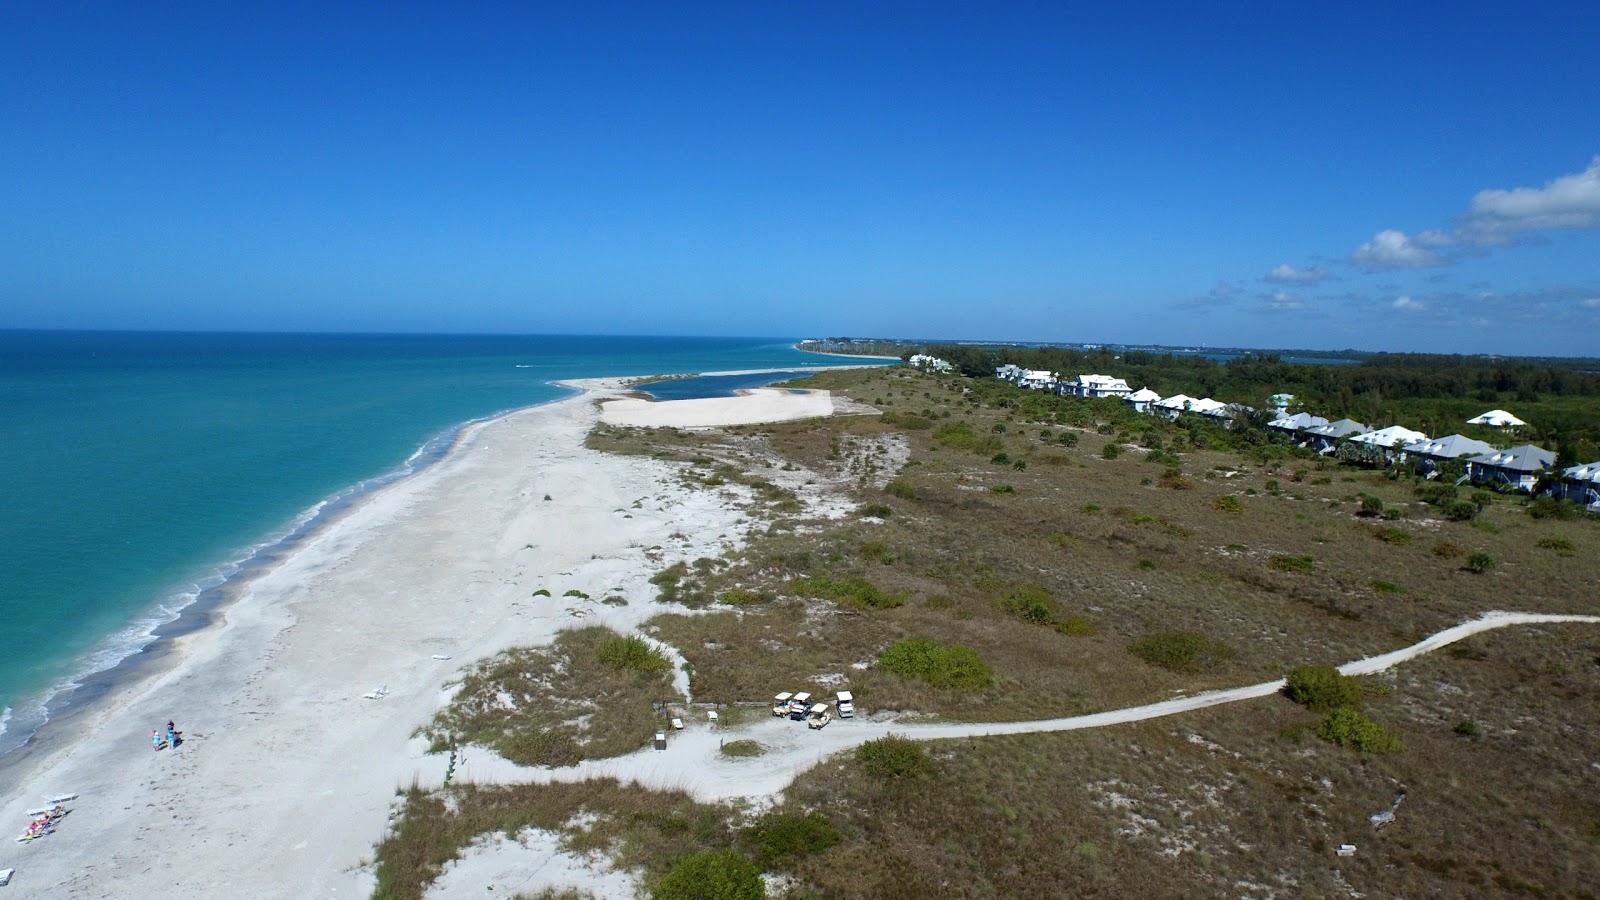 Foto av Palm Island beach med hög nivå av renlighet